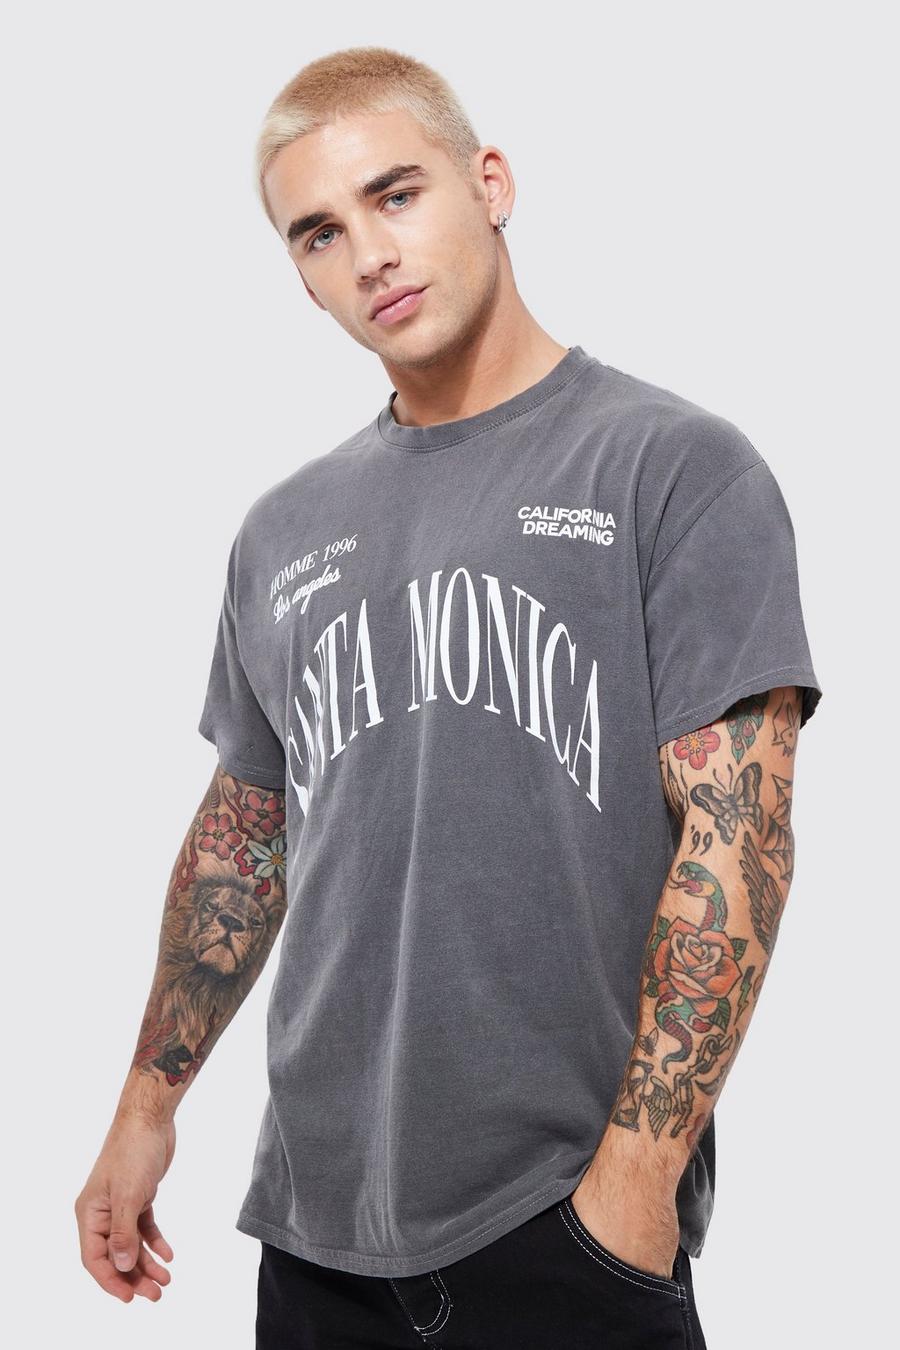 Kastiges T-Shirt mit Acid-Waschung und Santa Monica Print, Charcoal grey